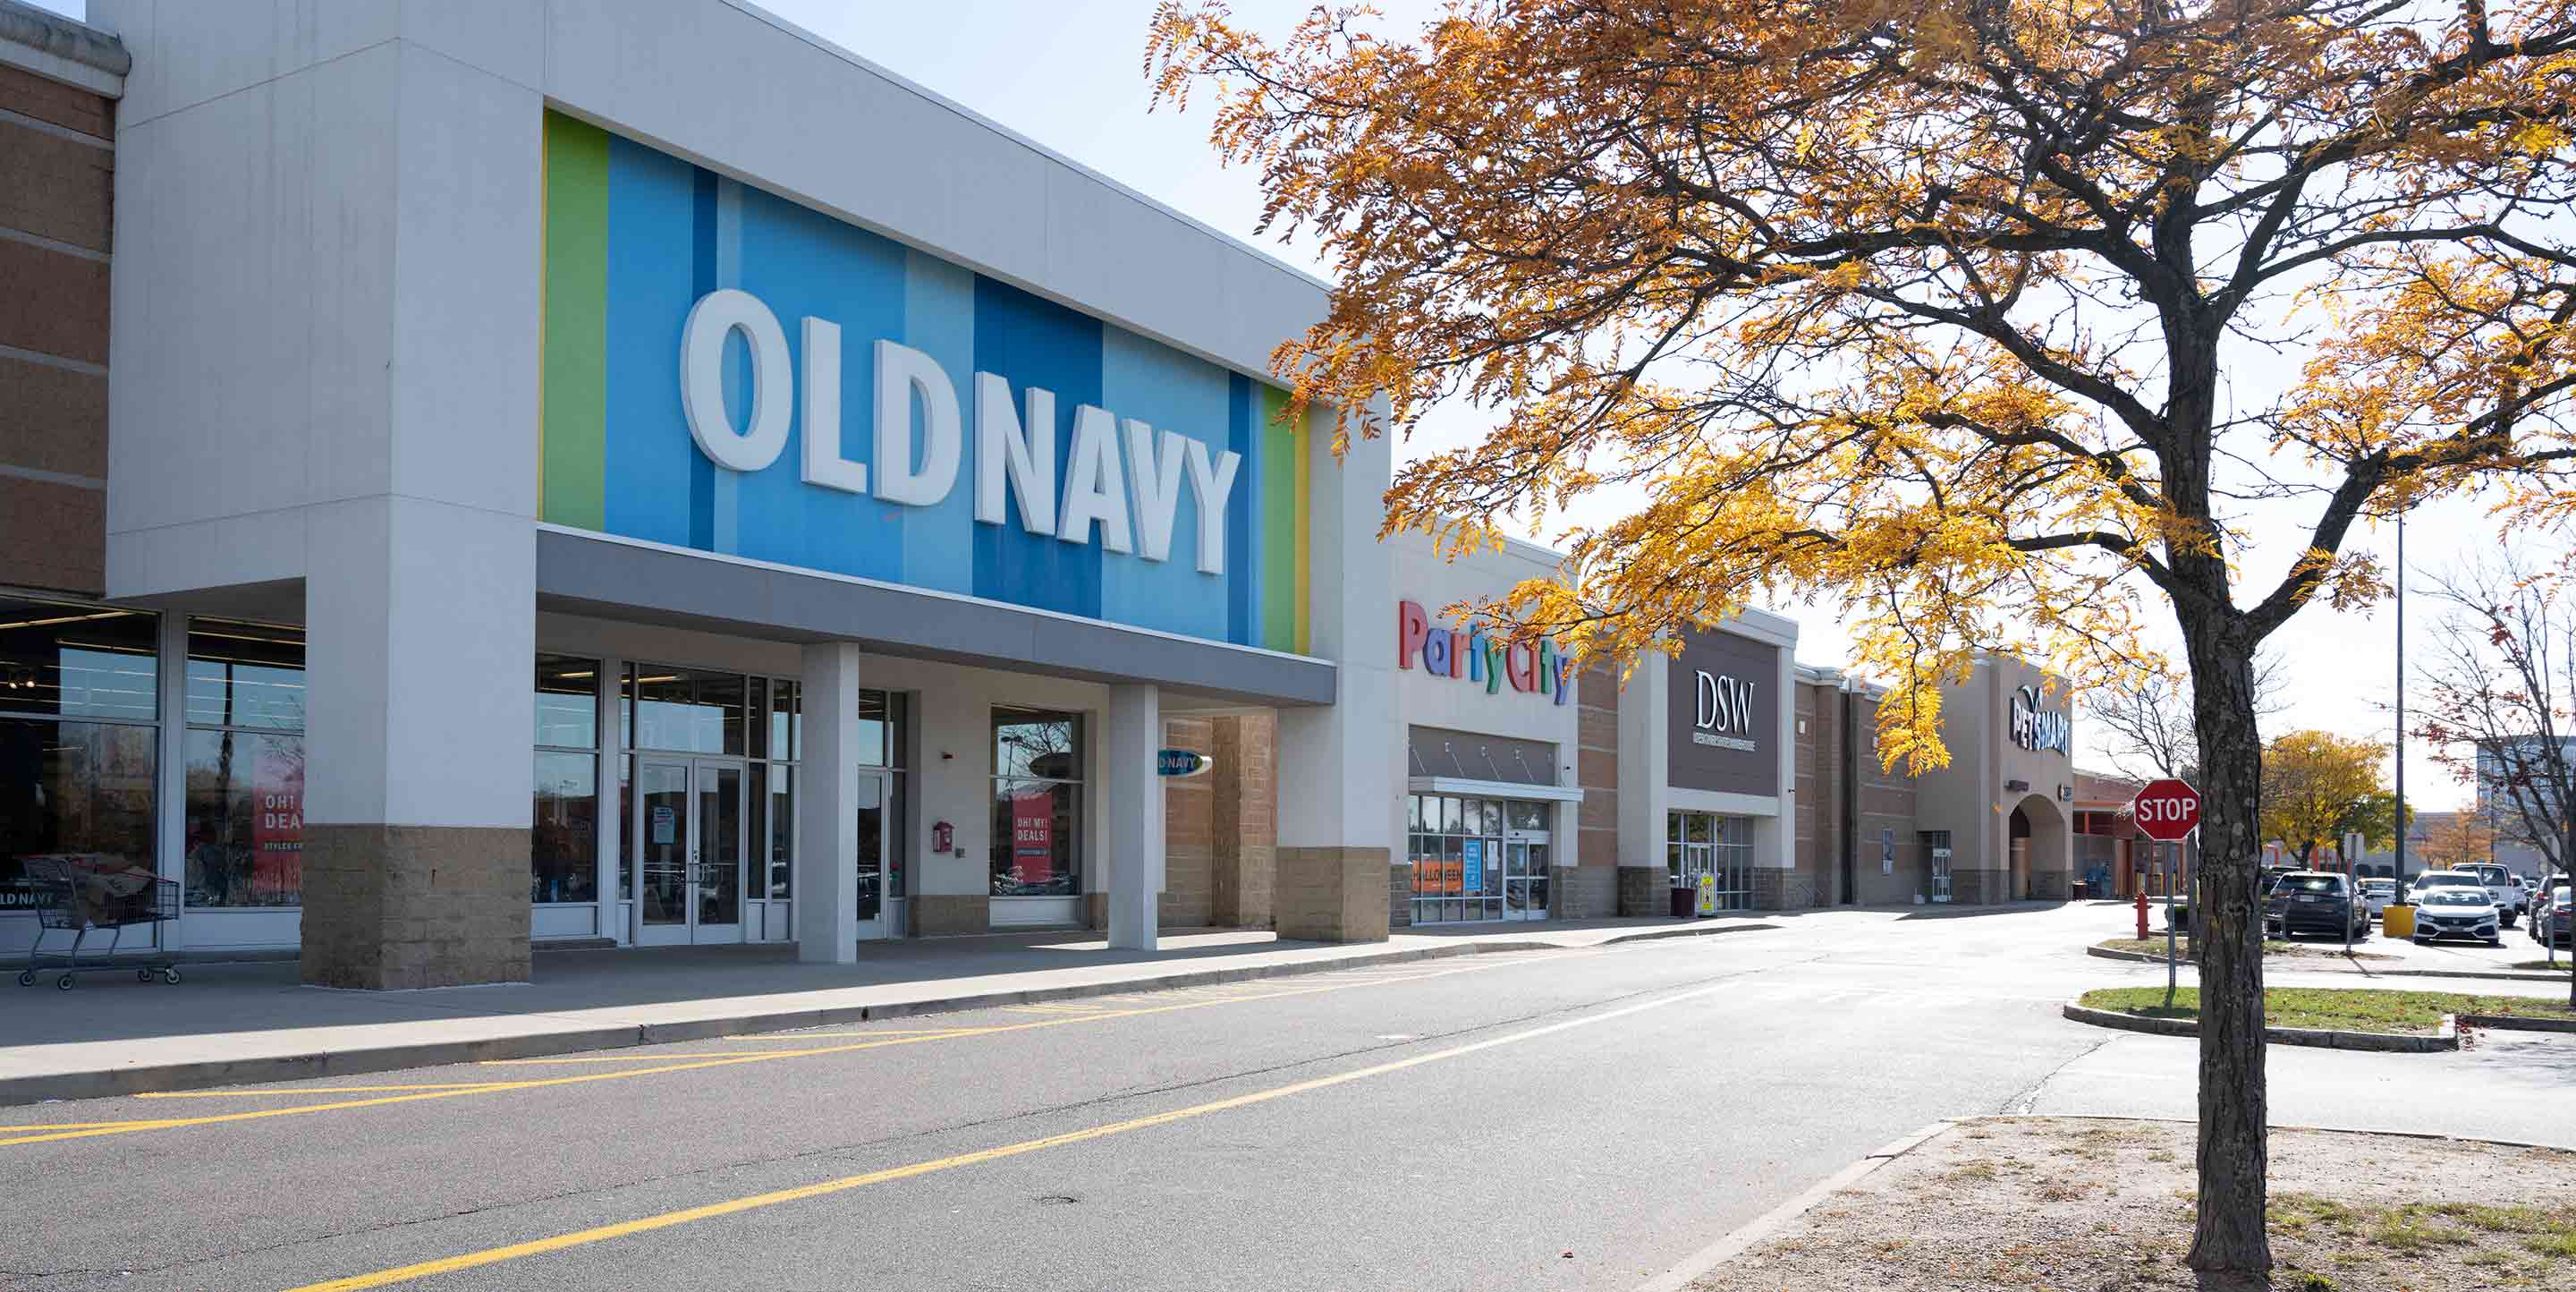 Old Navy storefront at Gateway Center shopping center.